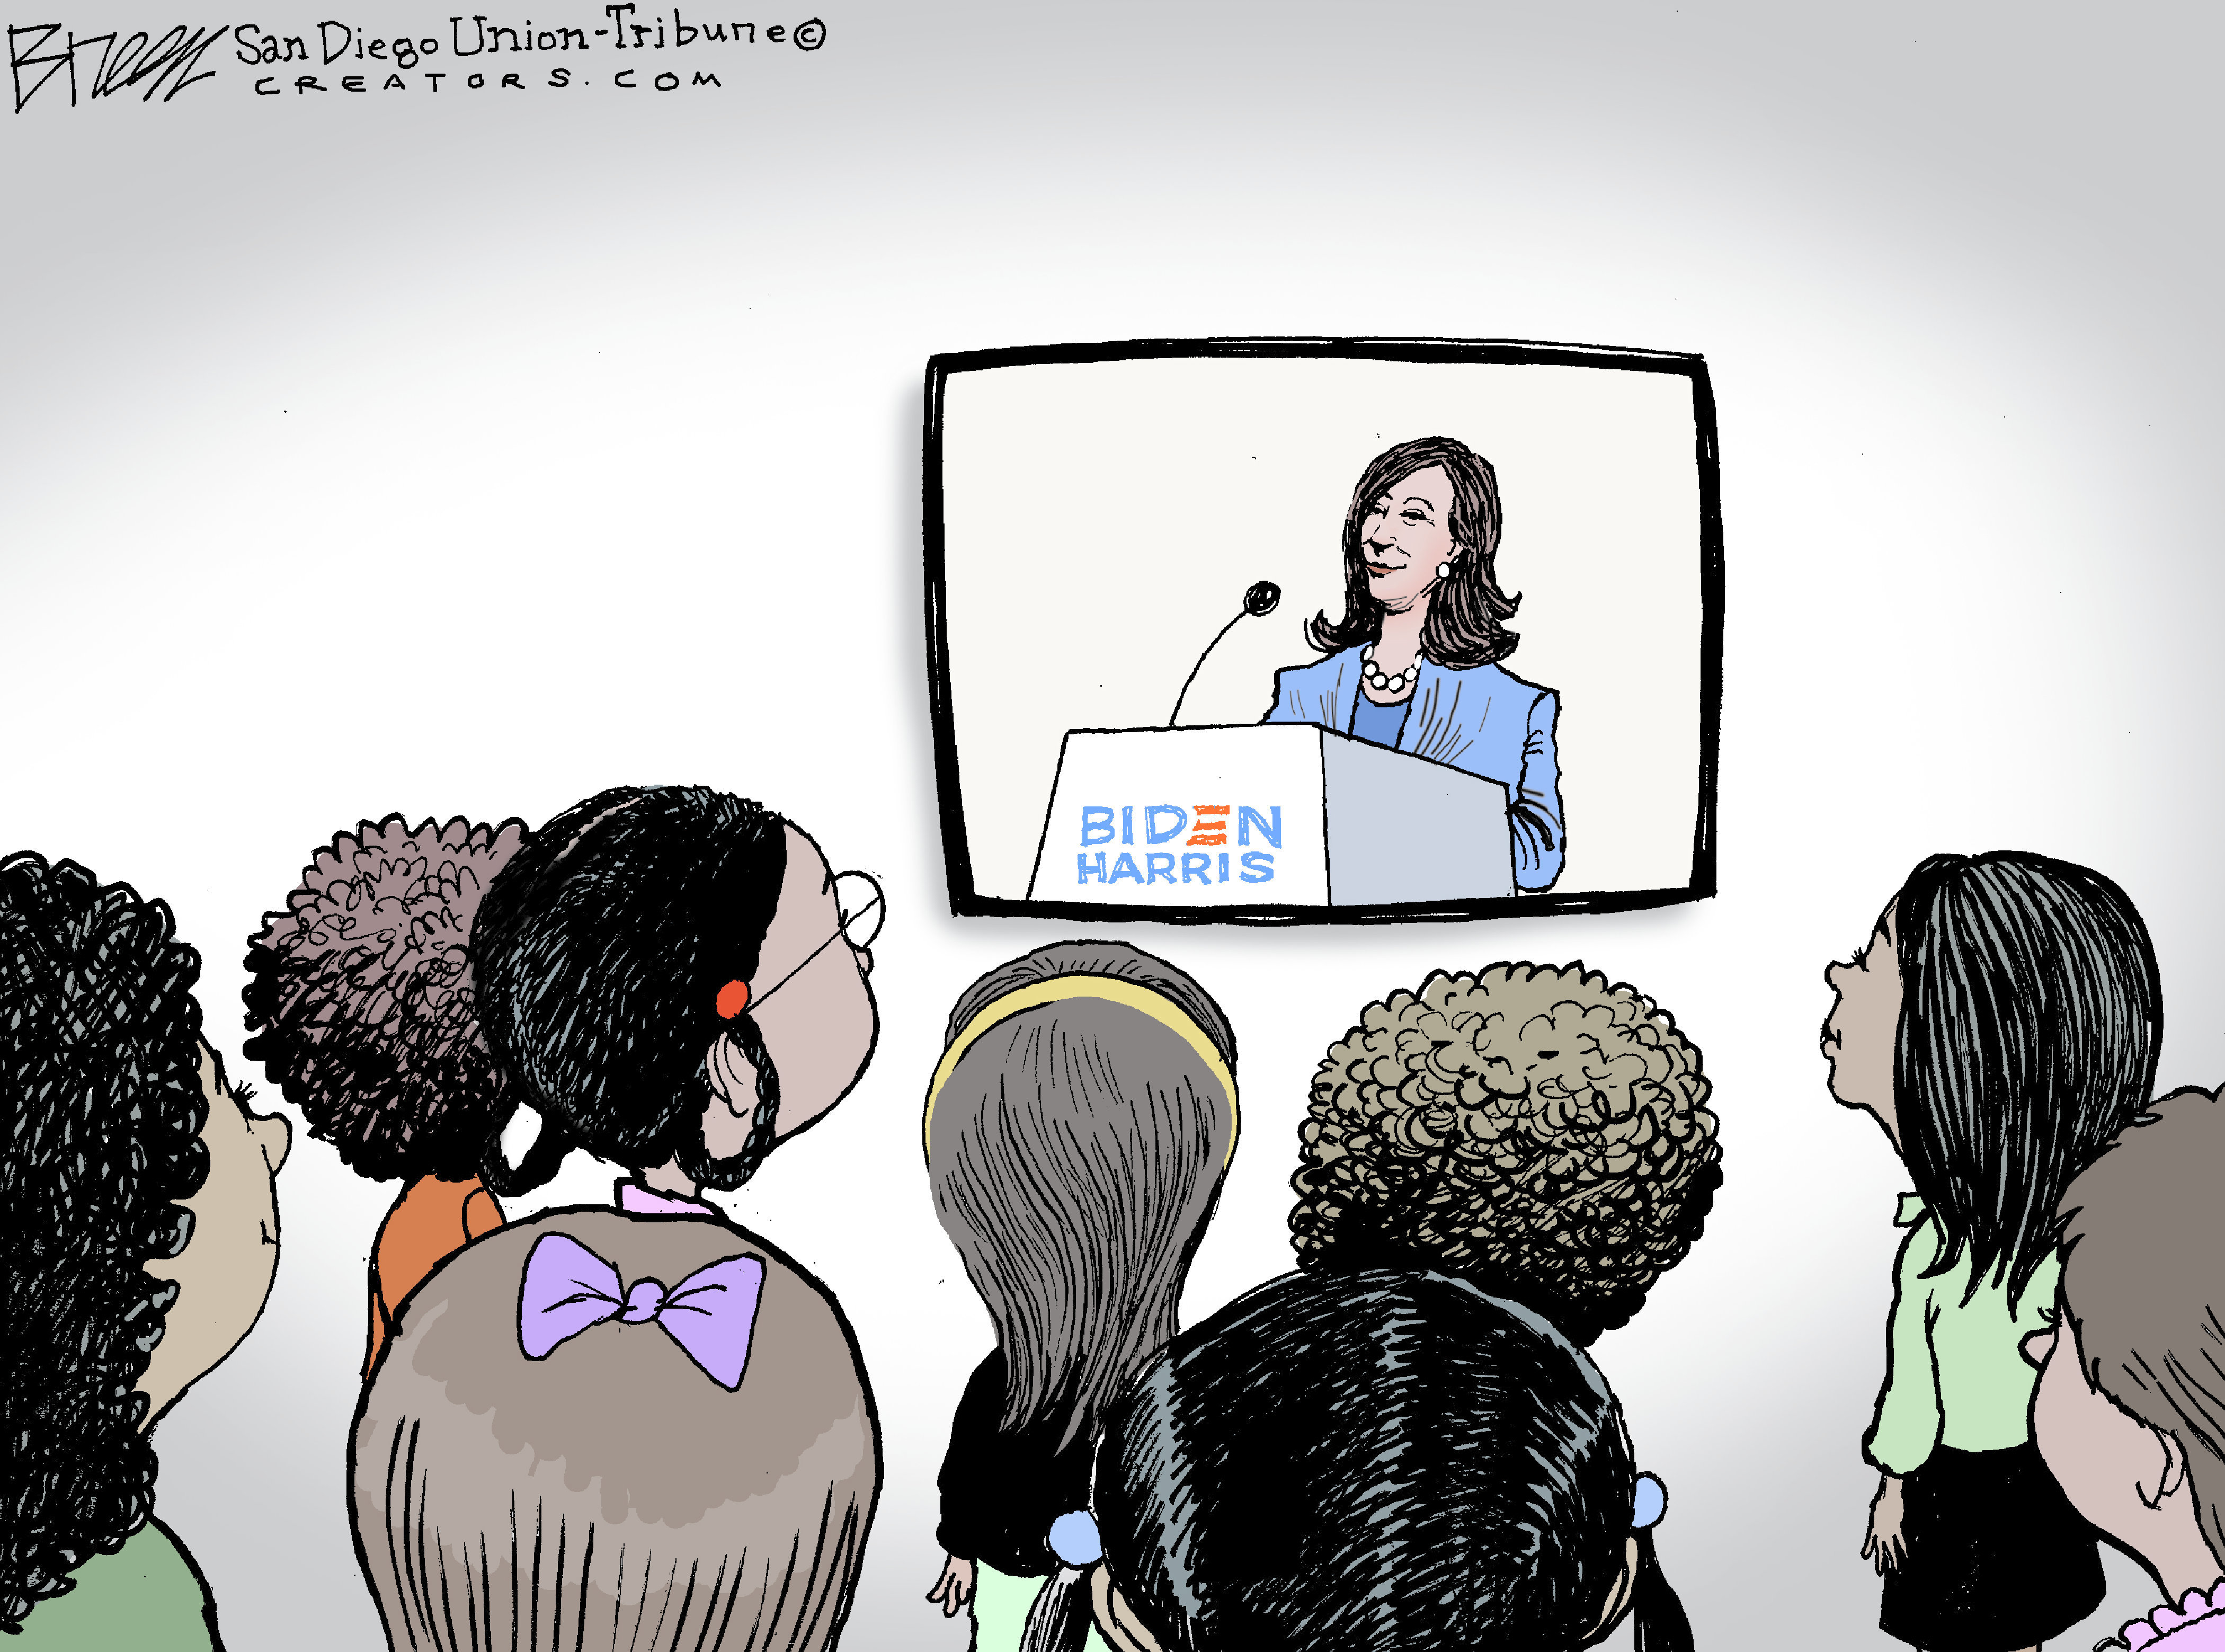 Political Cartoon U.S. Kamala Harris Inspiring Children Vice President 2020